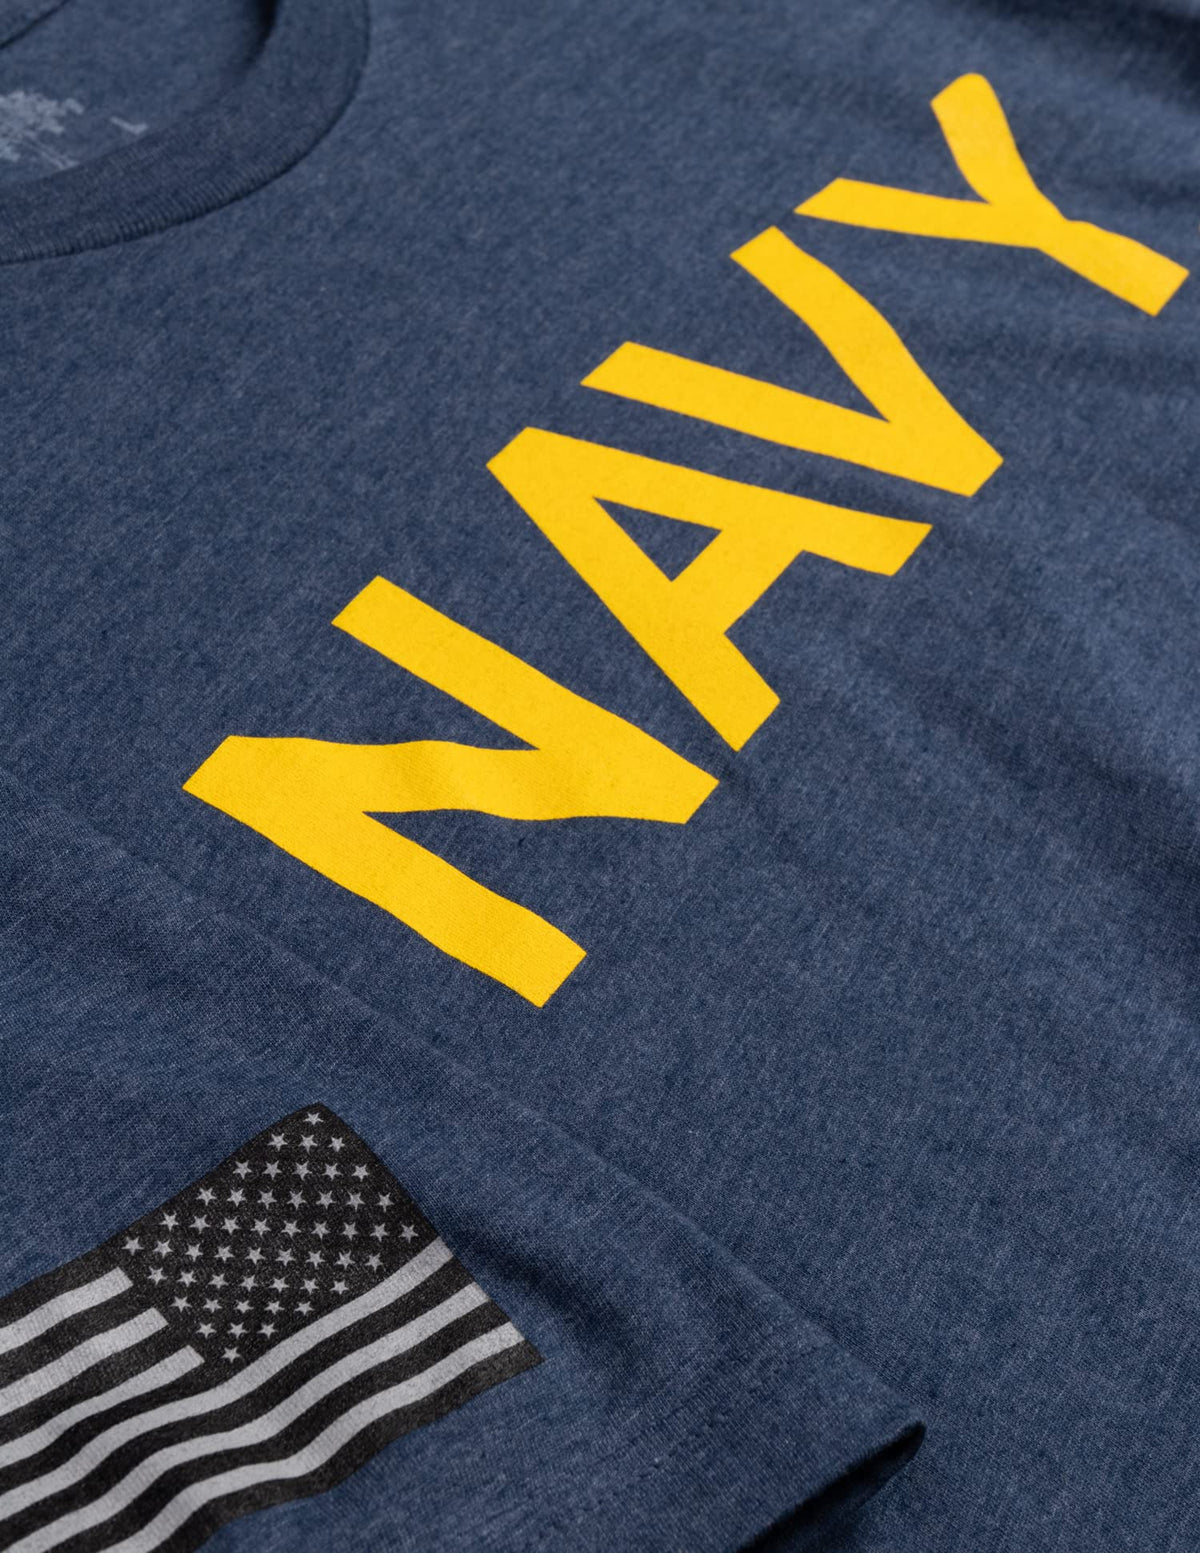 USS Mustin, DDG-89 | U.S. Navy Sailor Veteran USN United States Naval T-shirt for Men Women